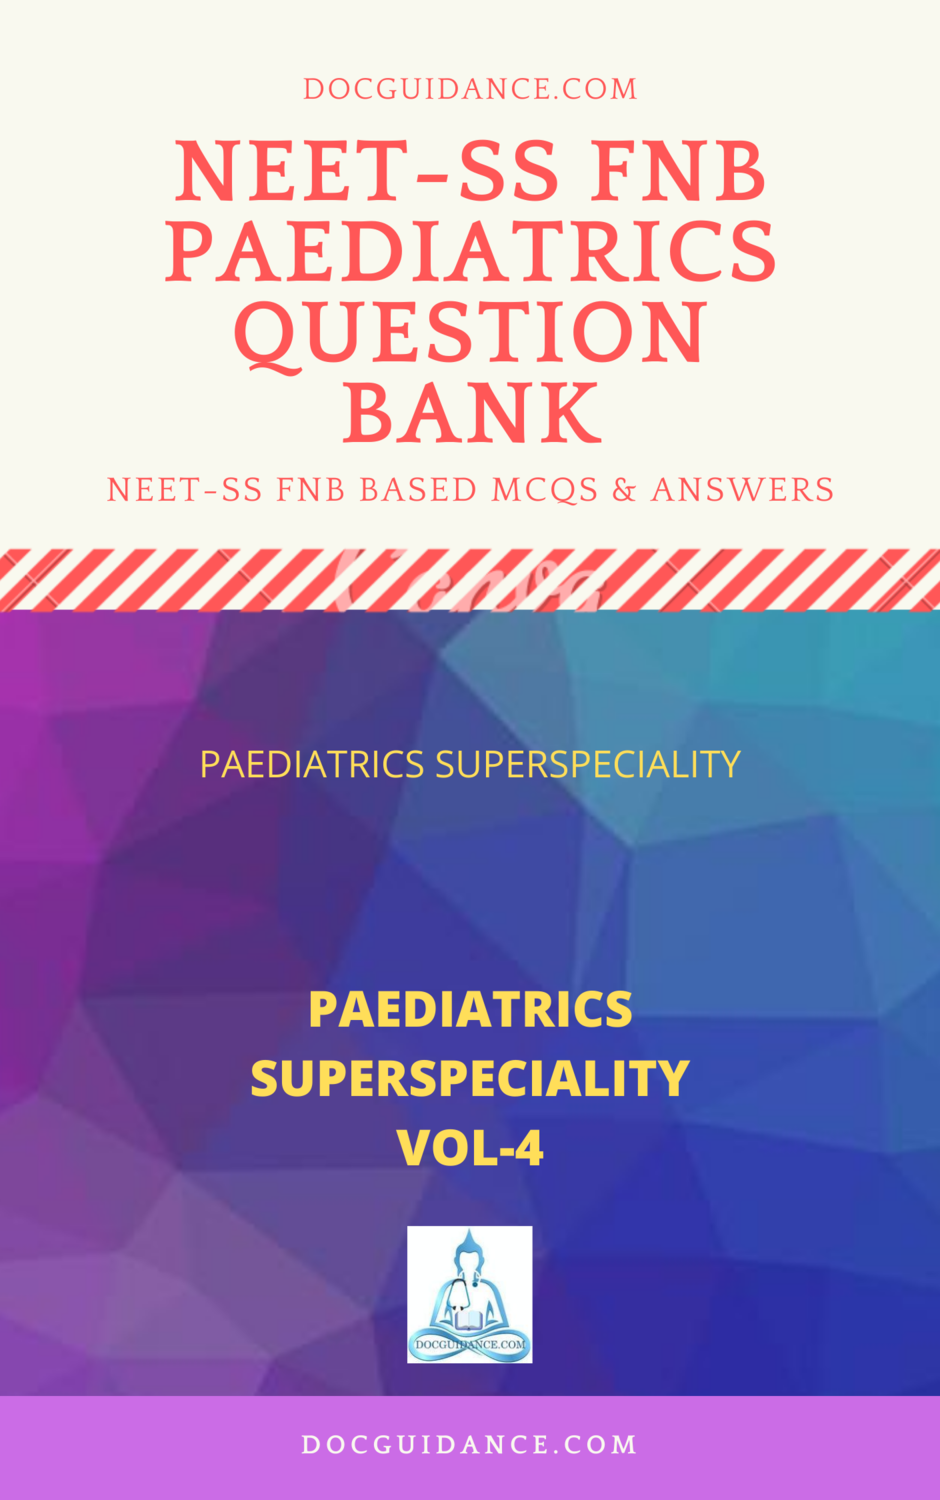 Paediatrics NEET-SS Question Bank vol-4